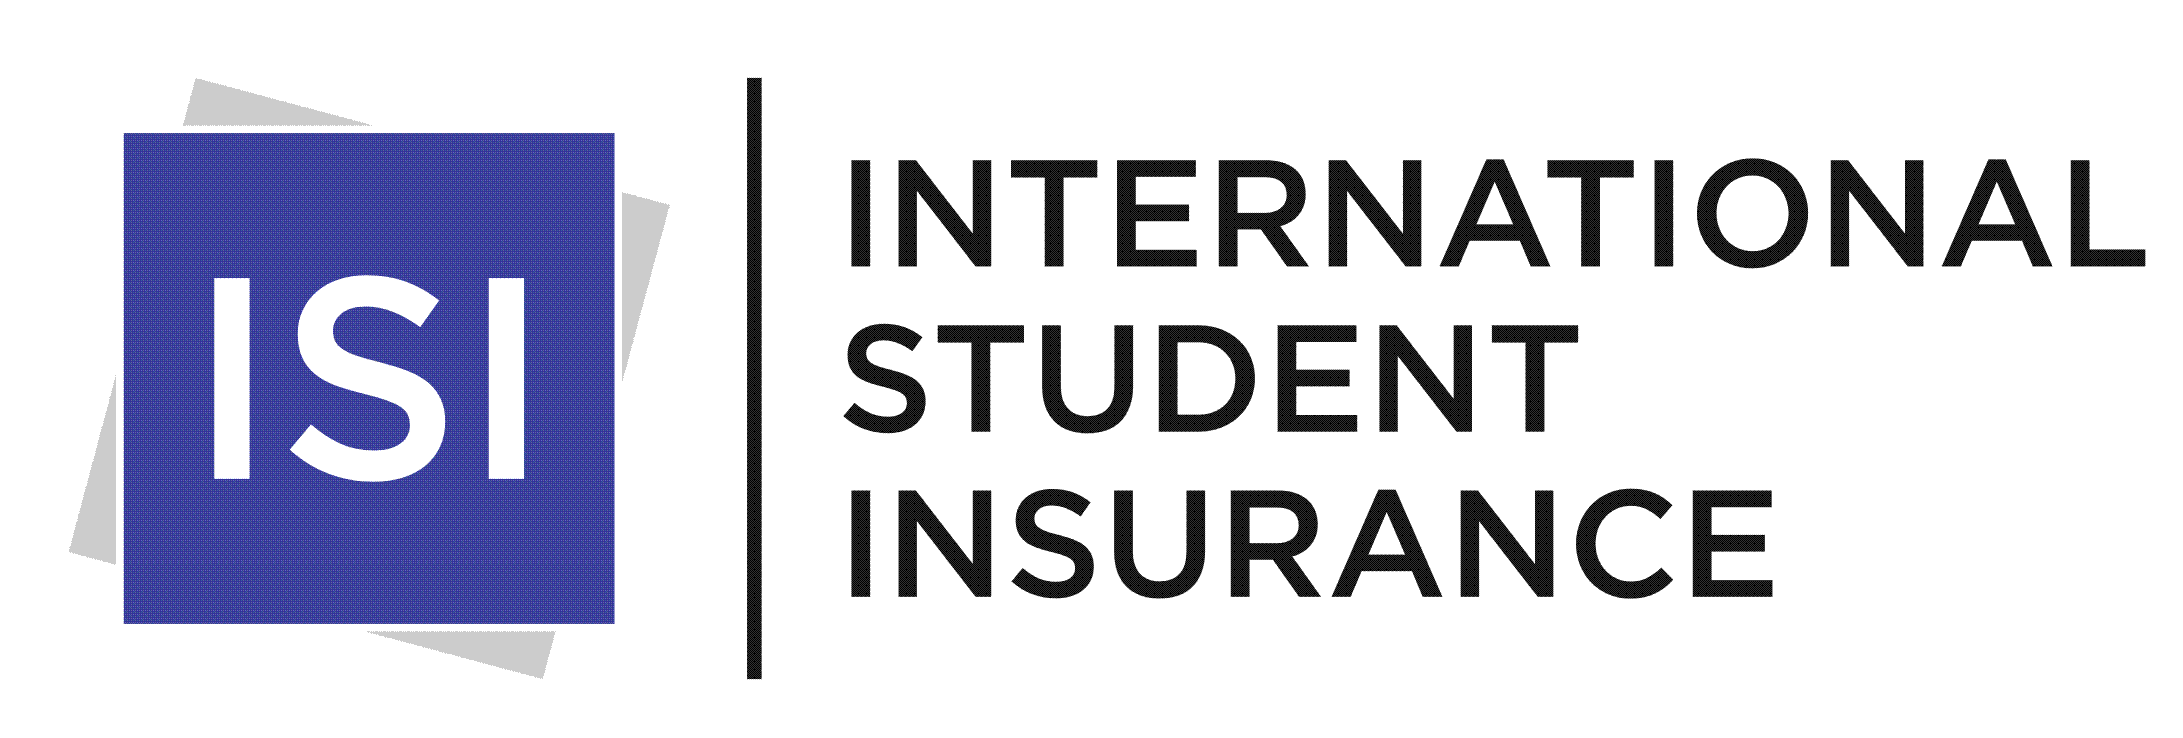 International Student Insurance logo